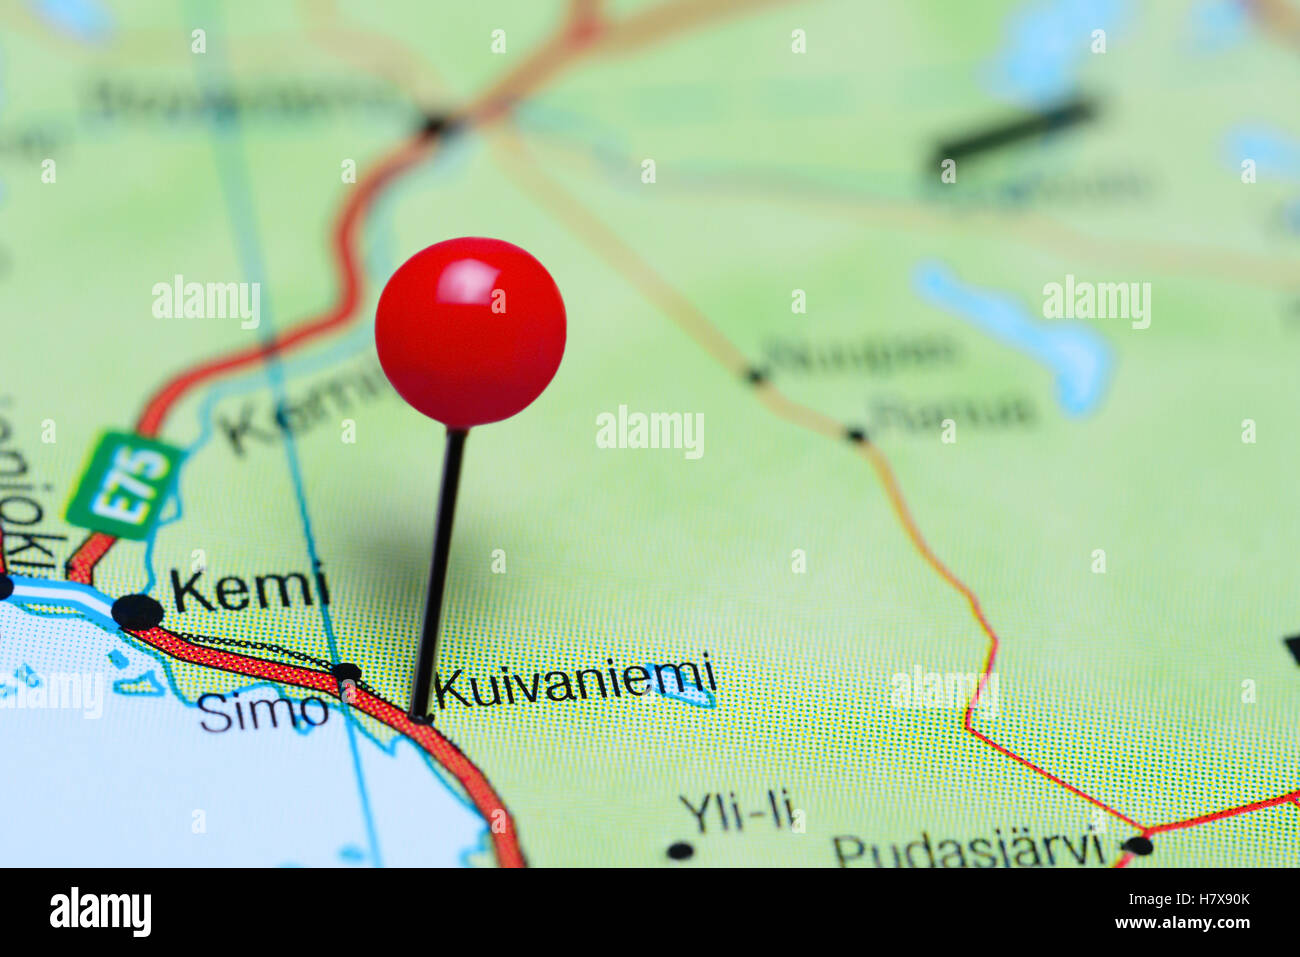 Kuivaniemi pinned on a map of Finland Stock Photo